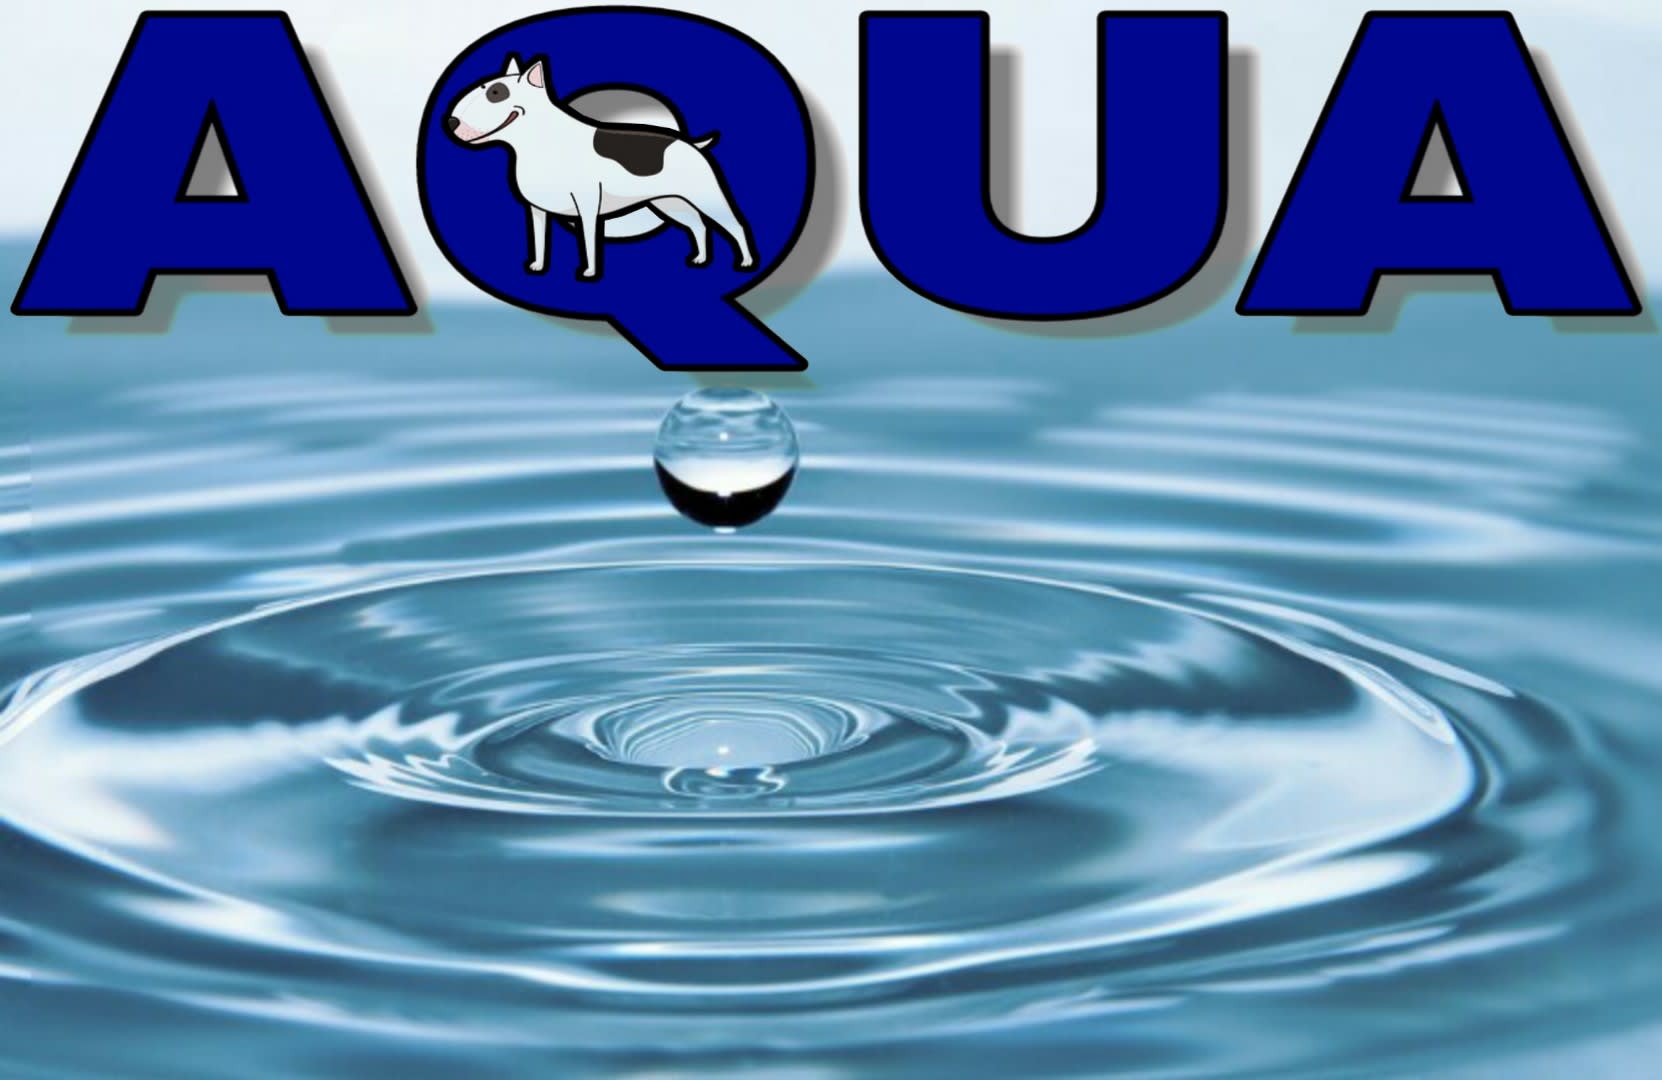 AQUA DAWGS MOBILE POWER WASH LLC.